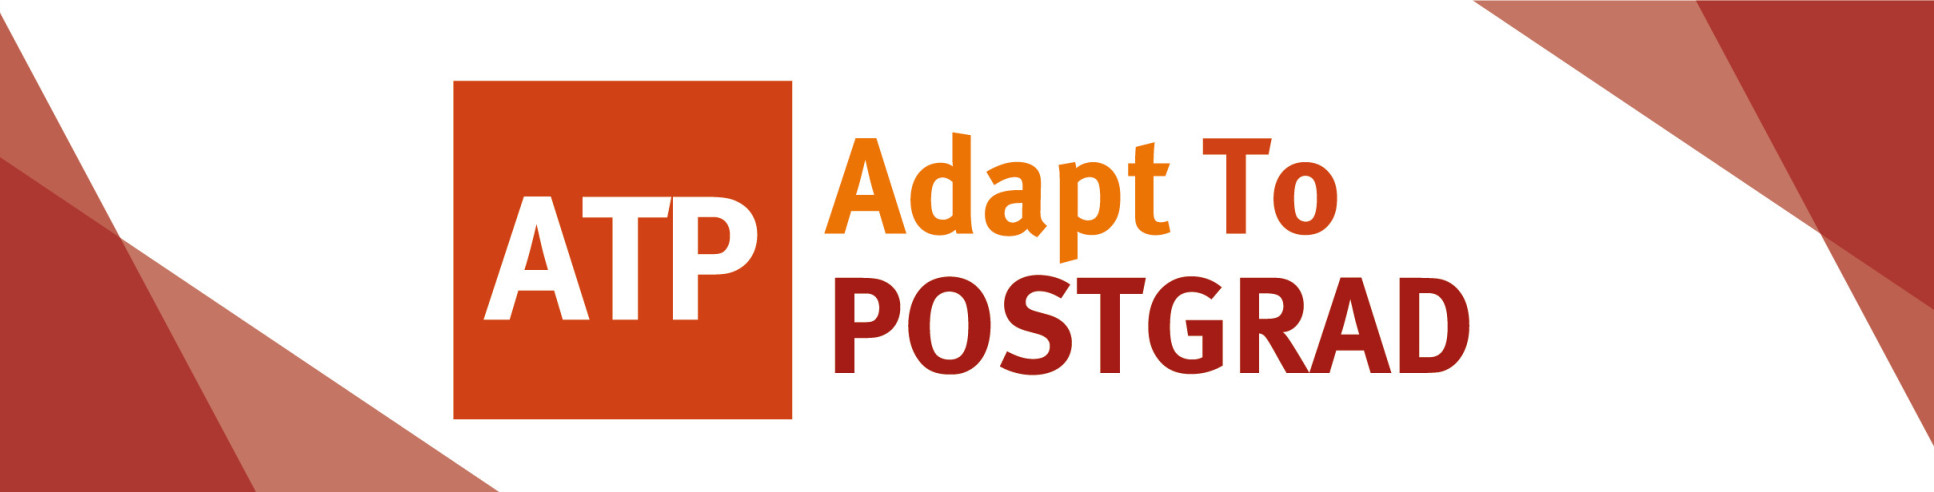 Adapt To Postgrad (ATP) Banner